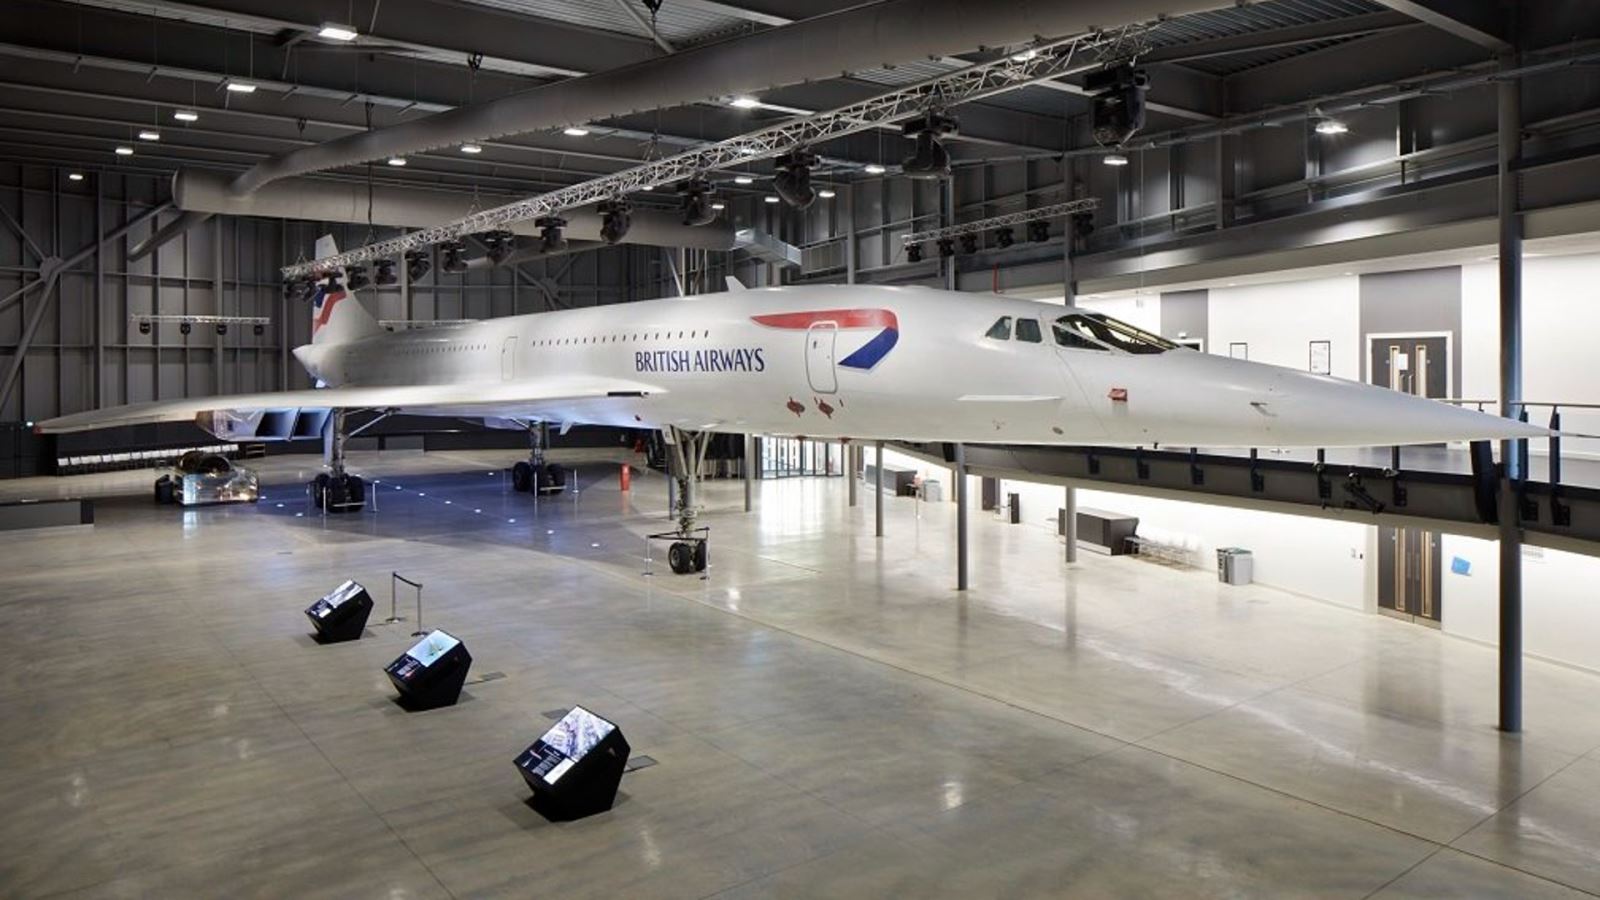 Concorde Alpha Foxtrot in the hangar at Aerospace Bristol